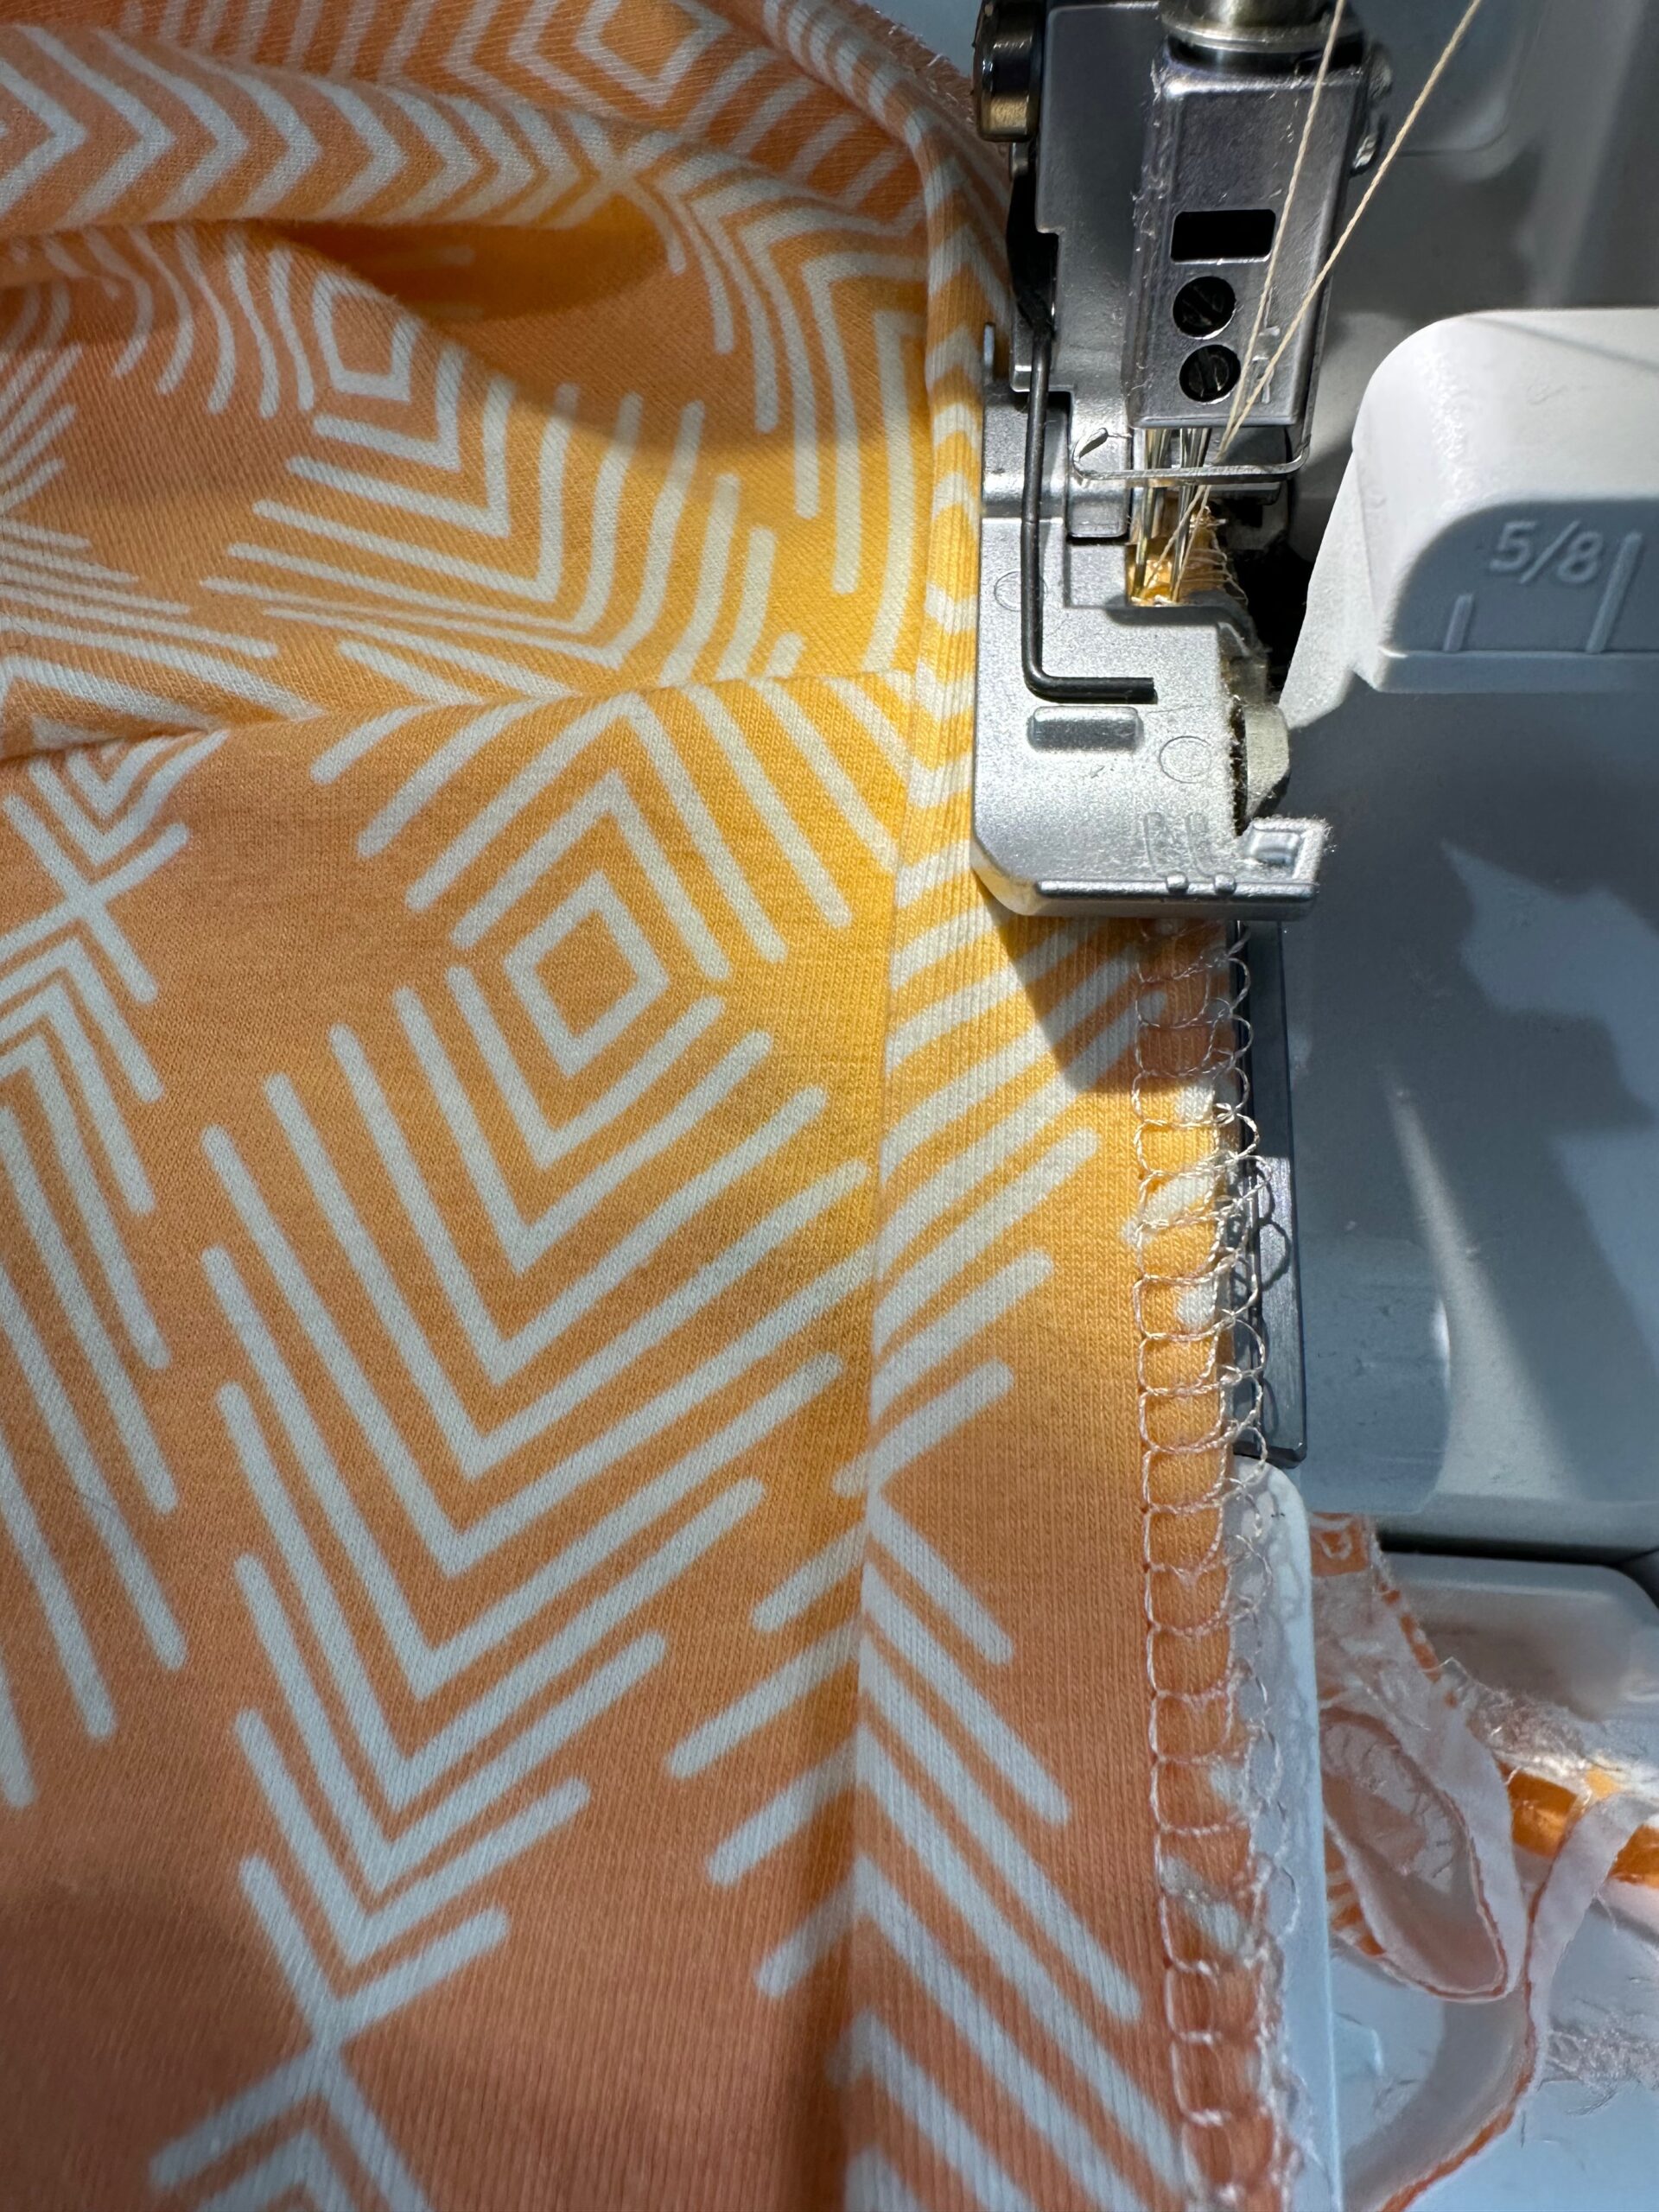 Sewing Knits vs Woven Fabrics - Sulky